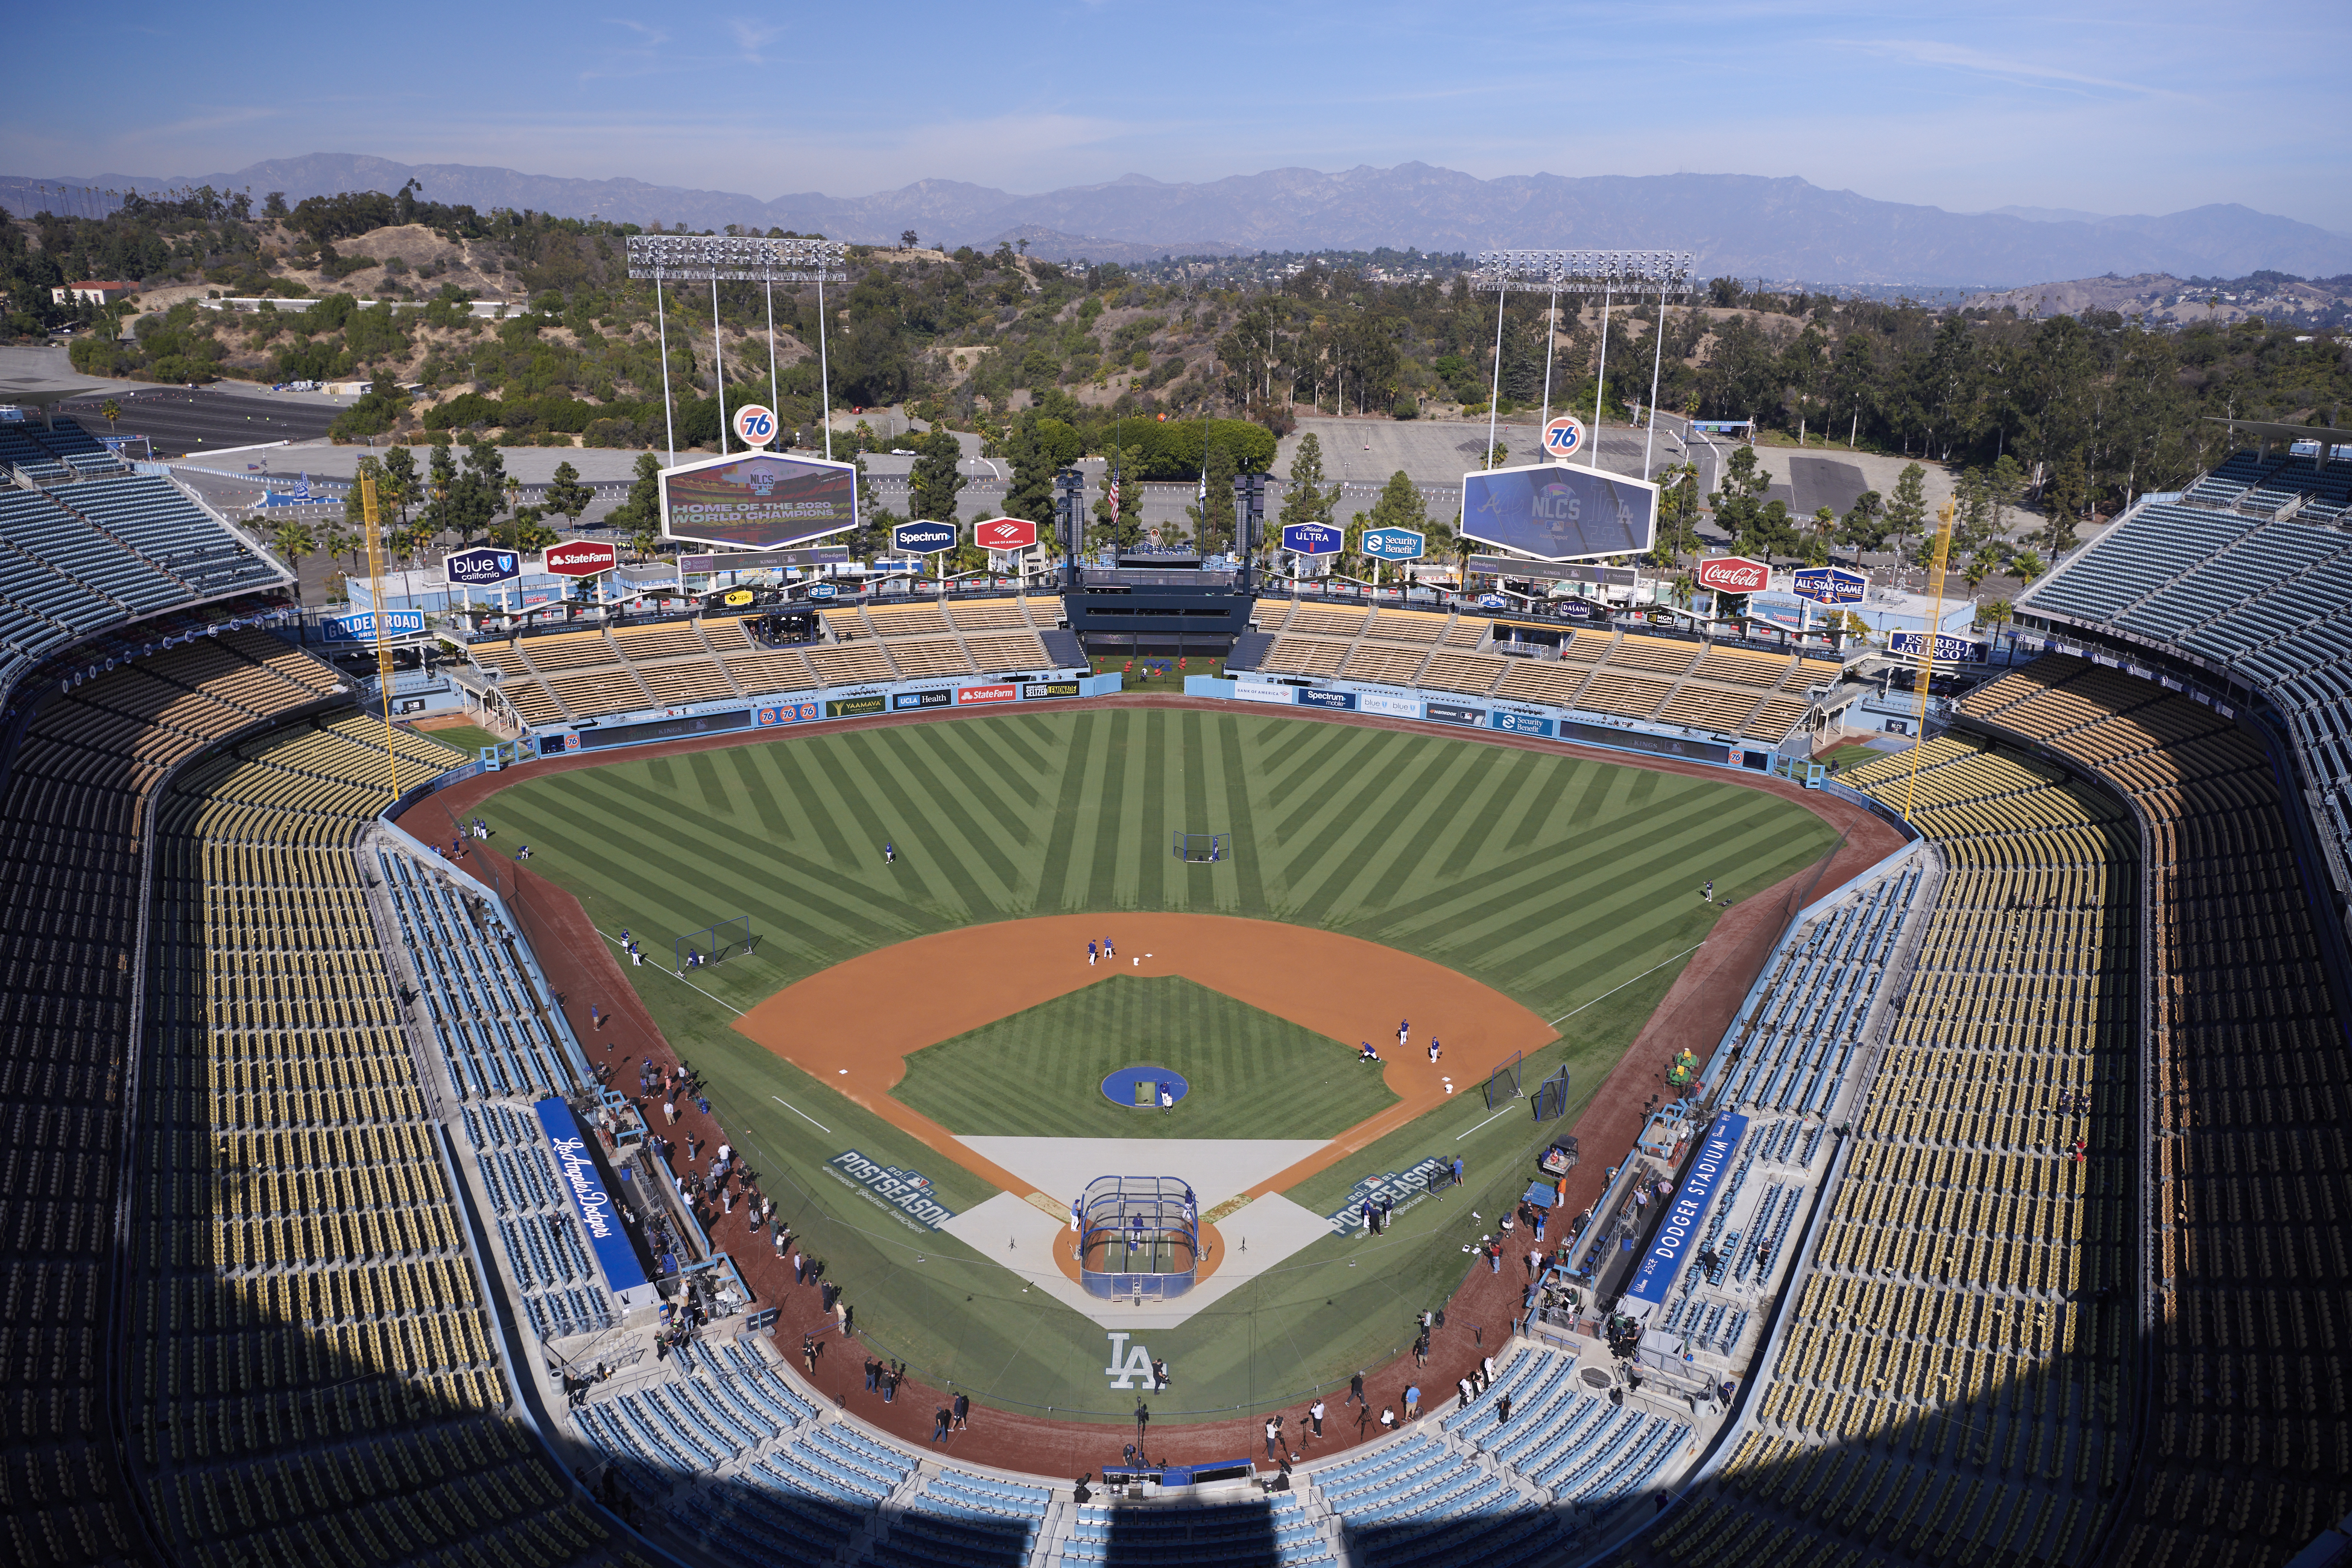 Los Angeles Dodgers vs Atlanta Braves, 2021 National League Championship Series